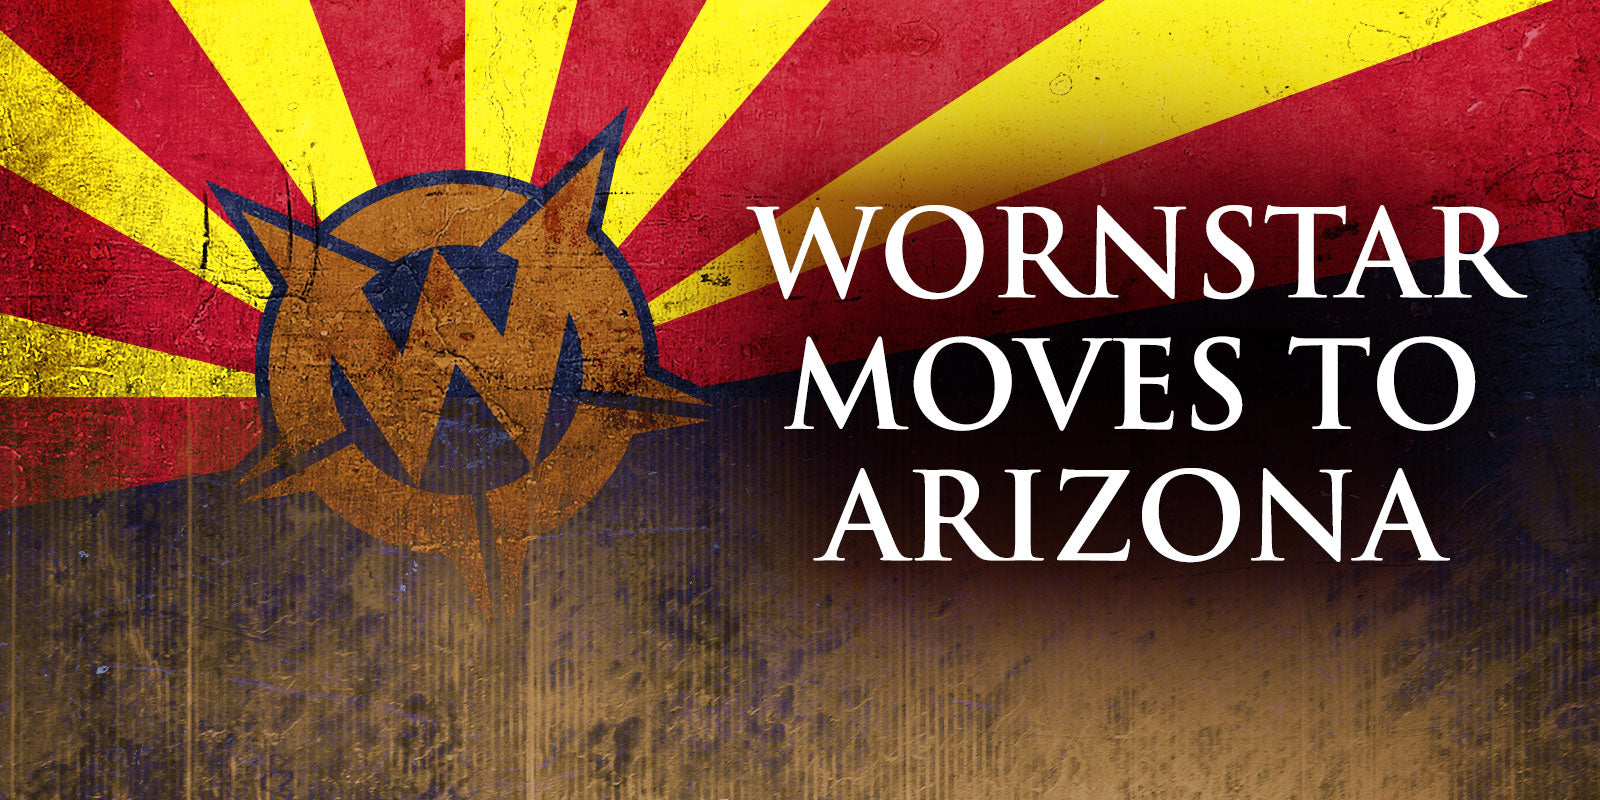 Wornstar Clothing Moves To Arizona